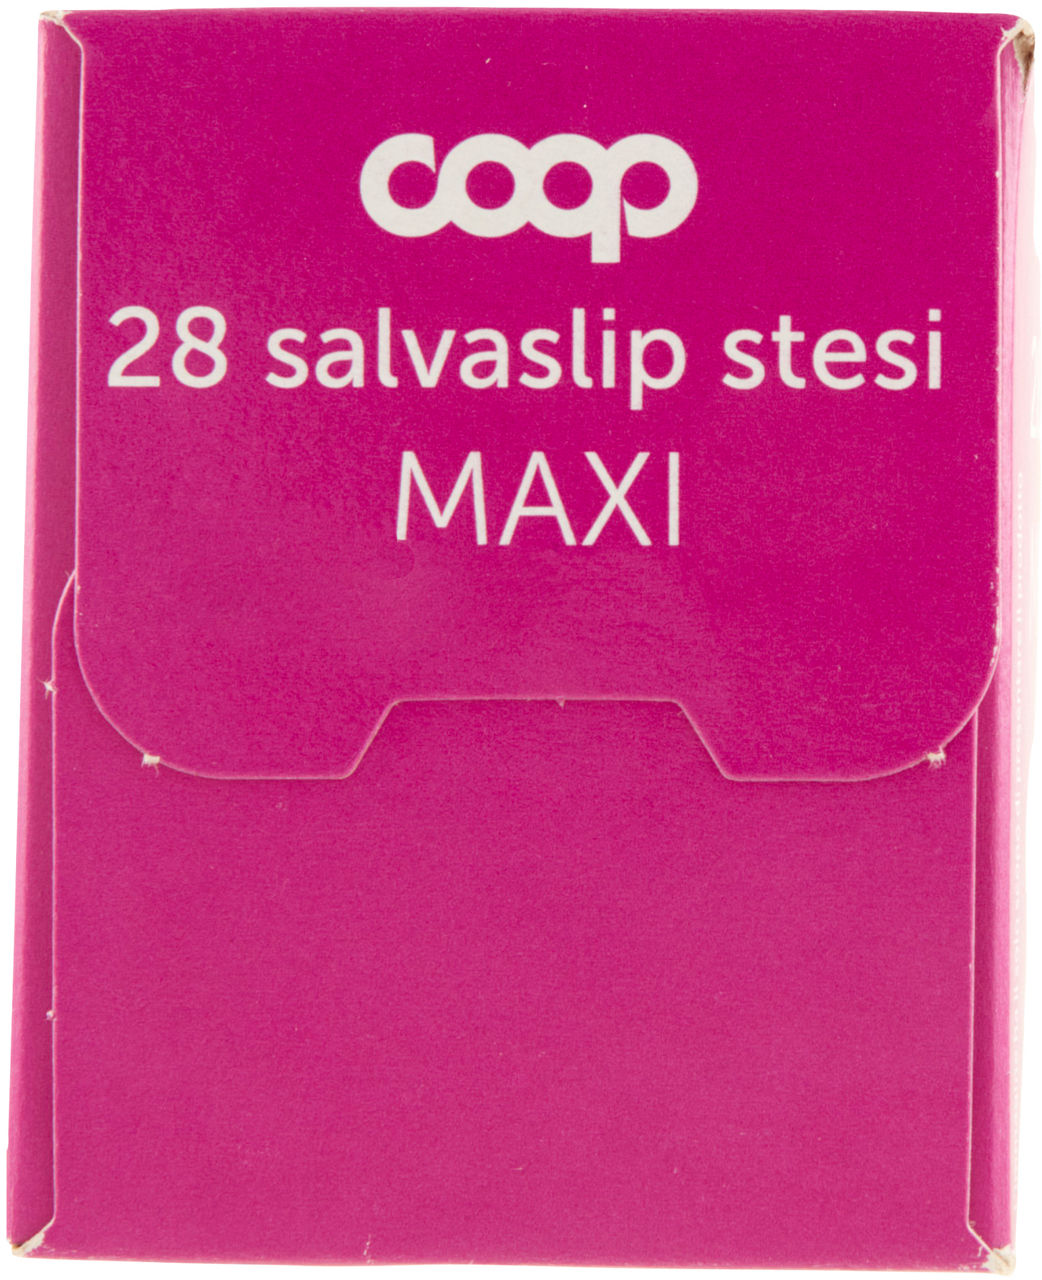 SALVASLIP MAXI COOP DISTESI  SCATOLA PZ.28 - 3